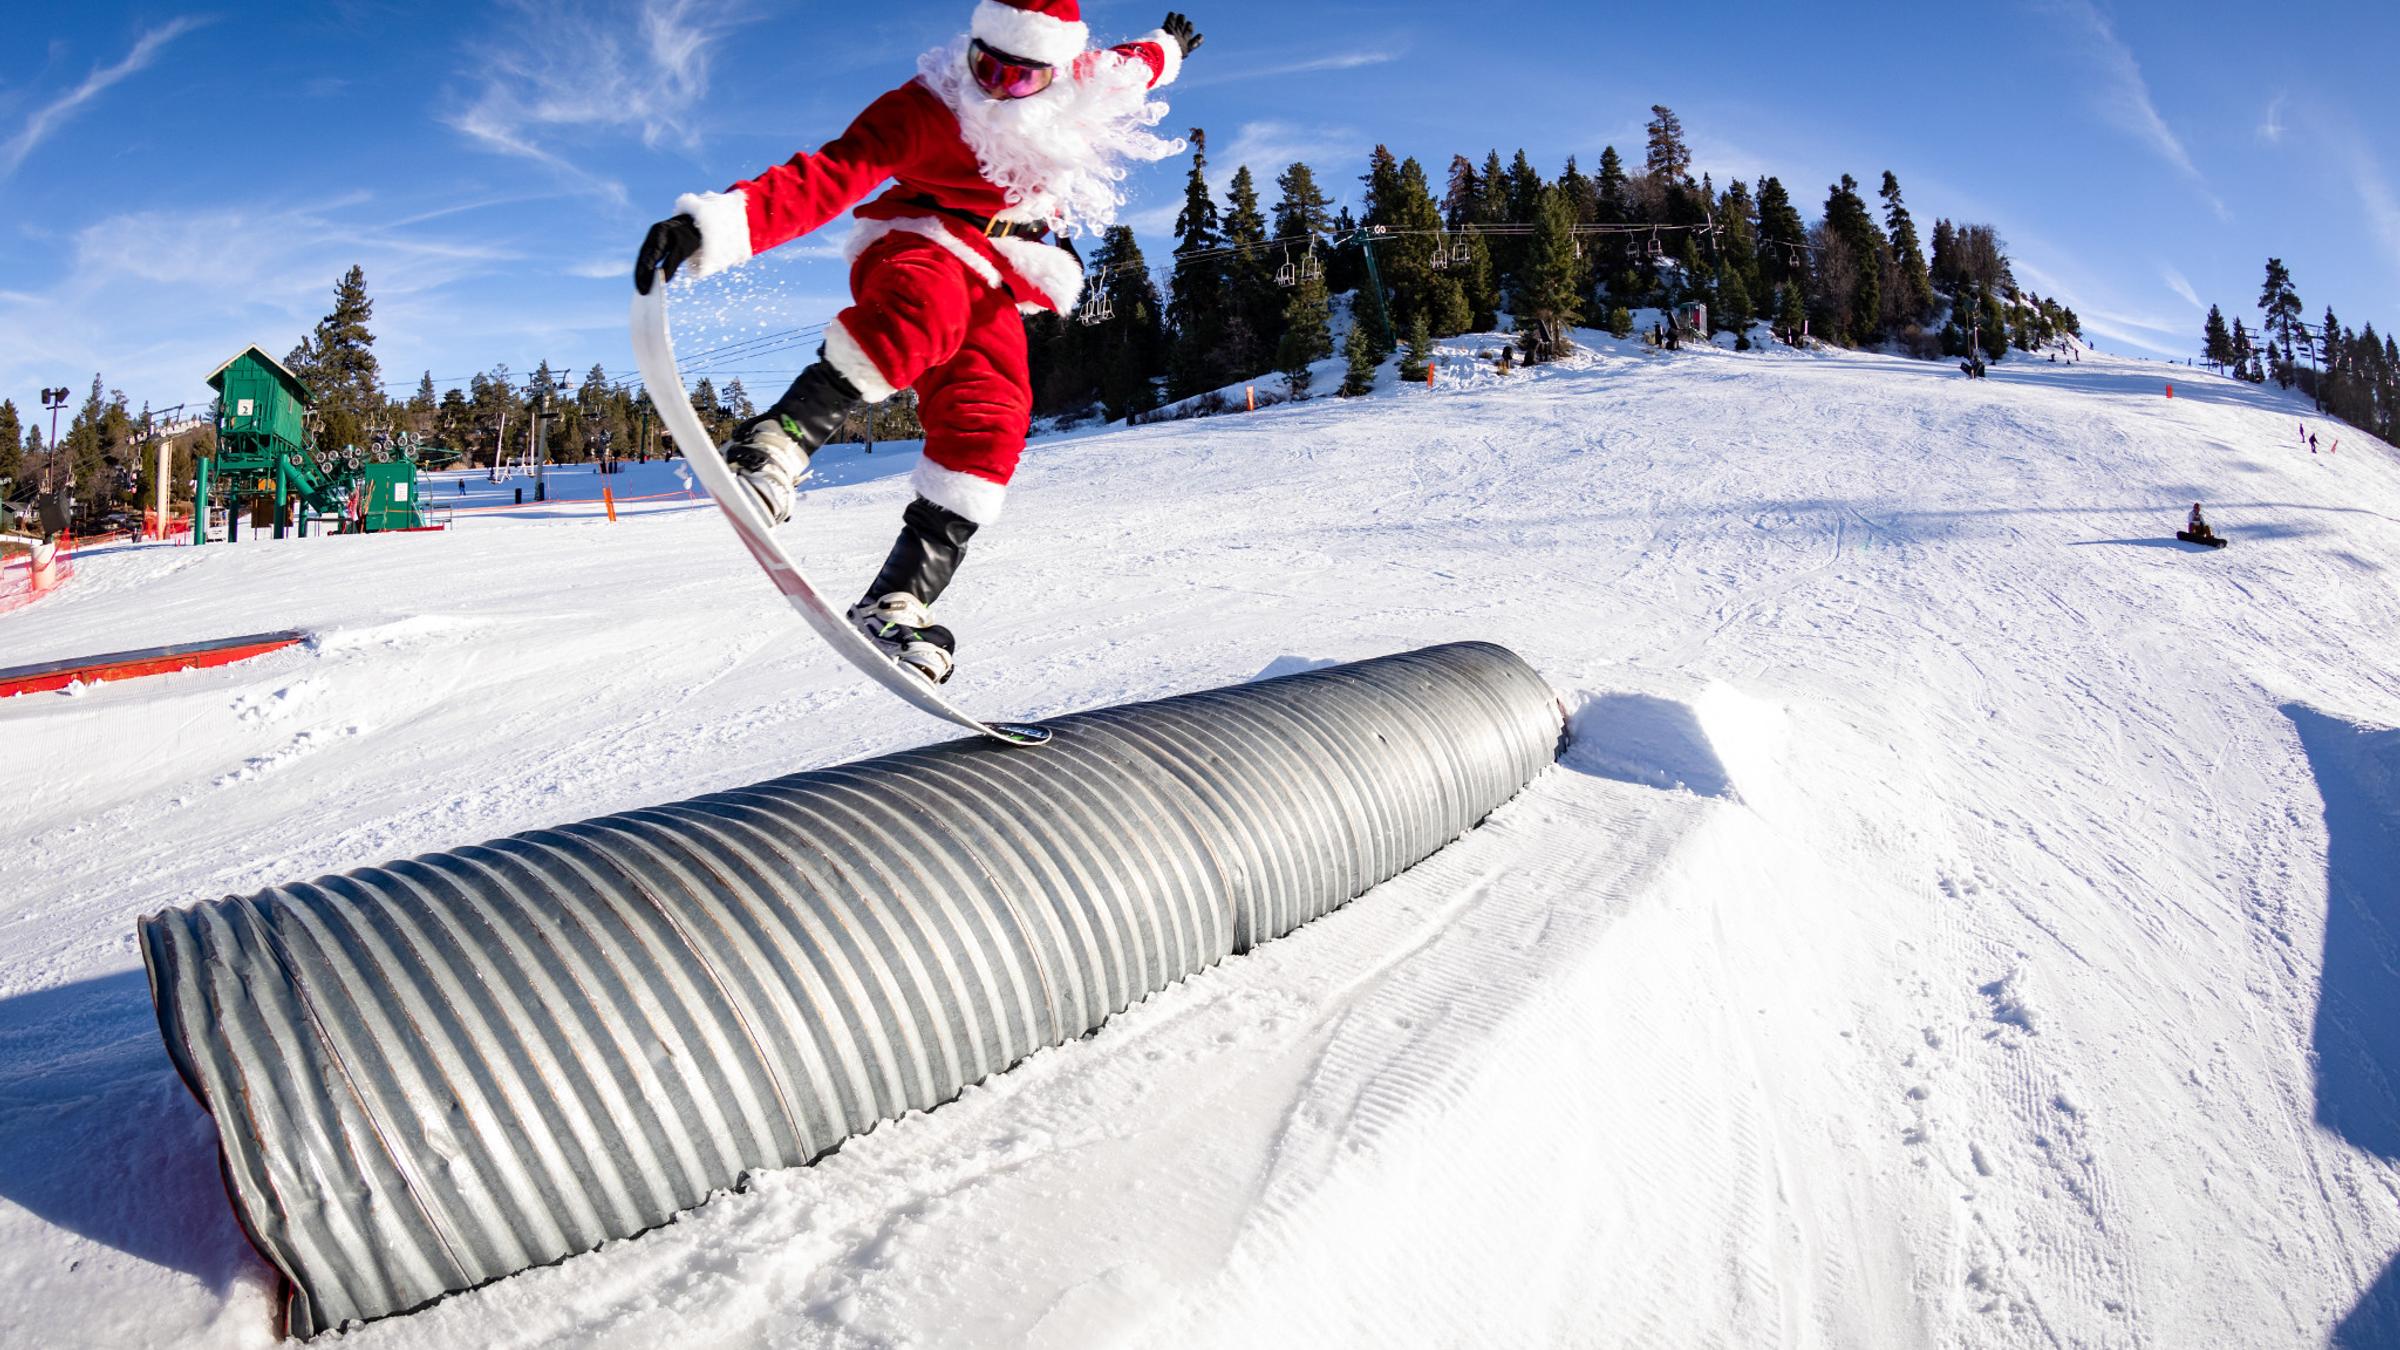 Santa grinding on a snowboard on a rail